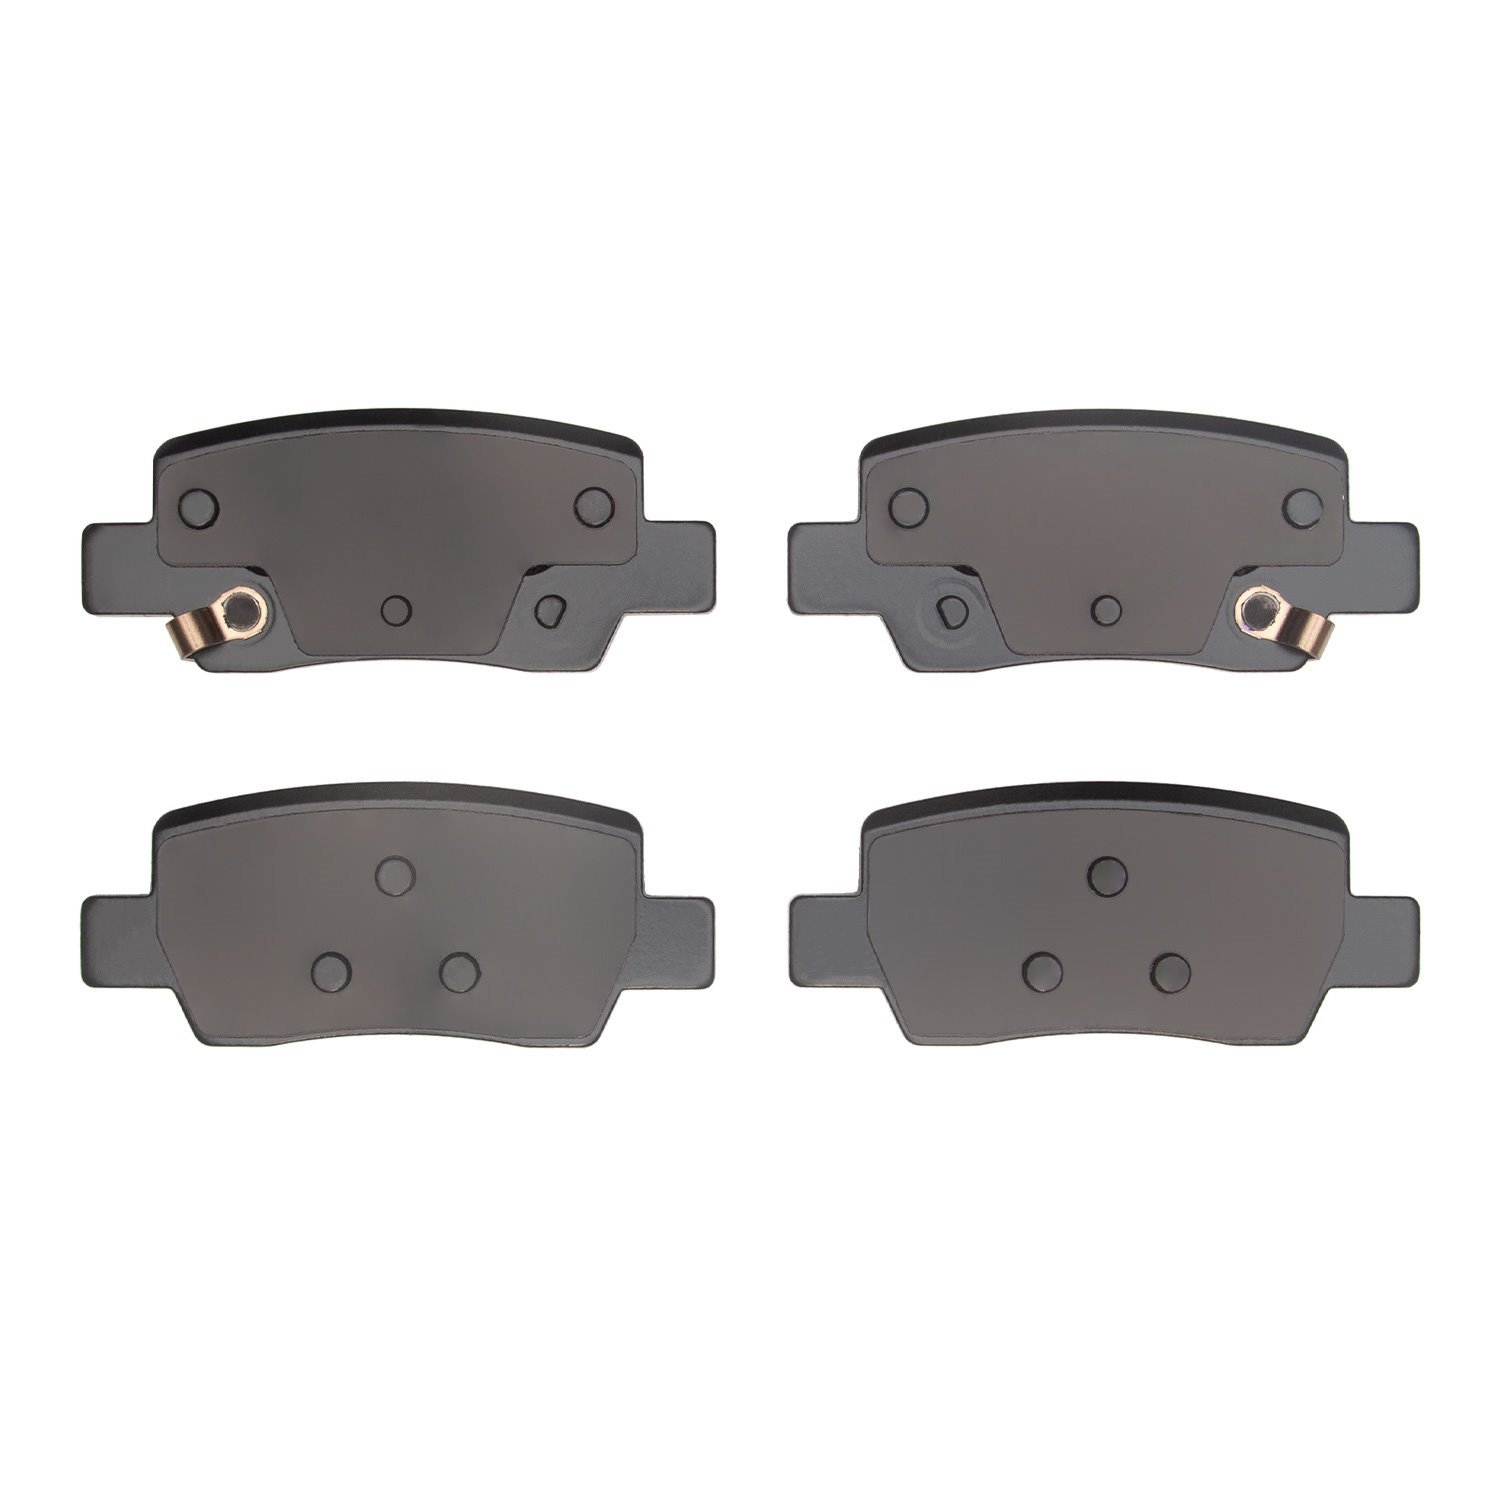 1310-2373-00 3000-Series Ceramic Brake Pads, Fits Select Kia/Hyundai/Genesis, Position: Rear